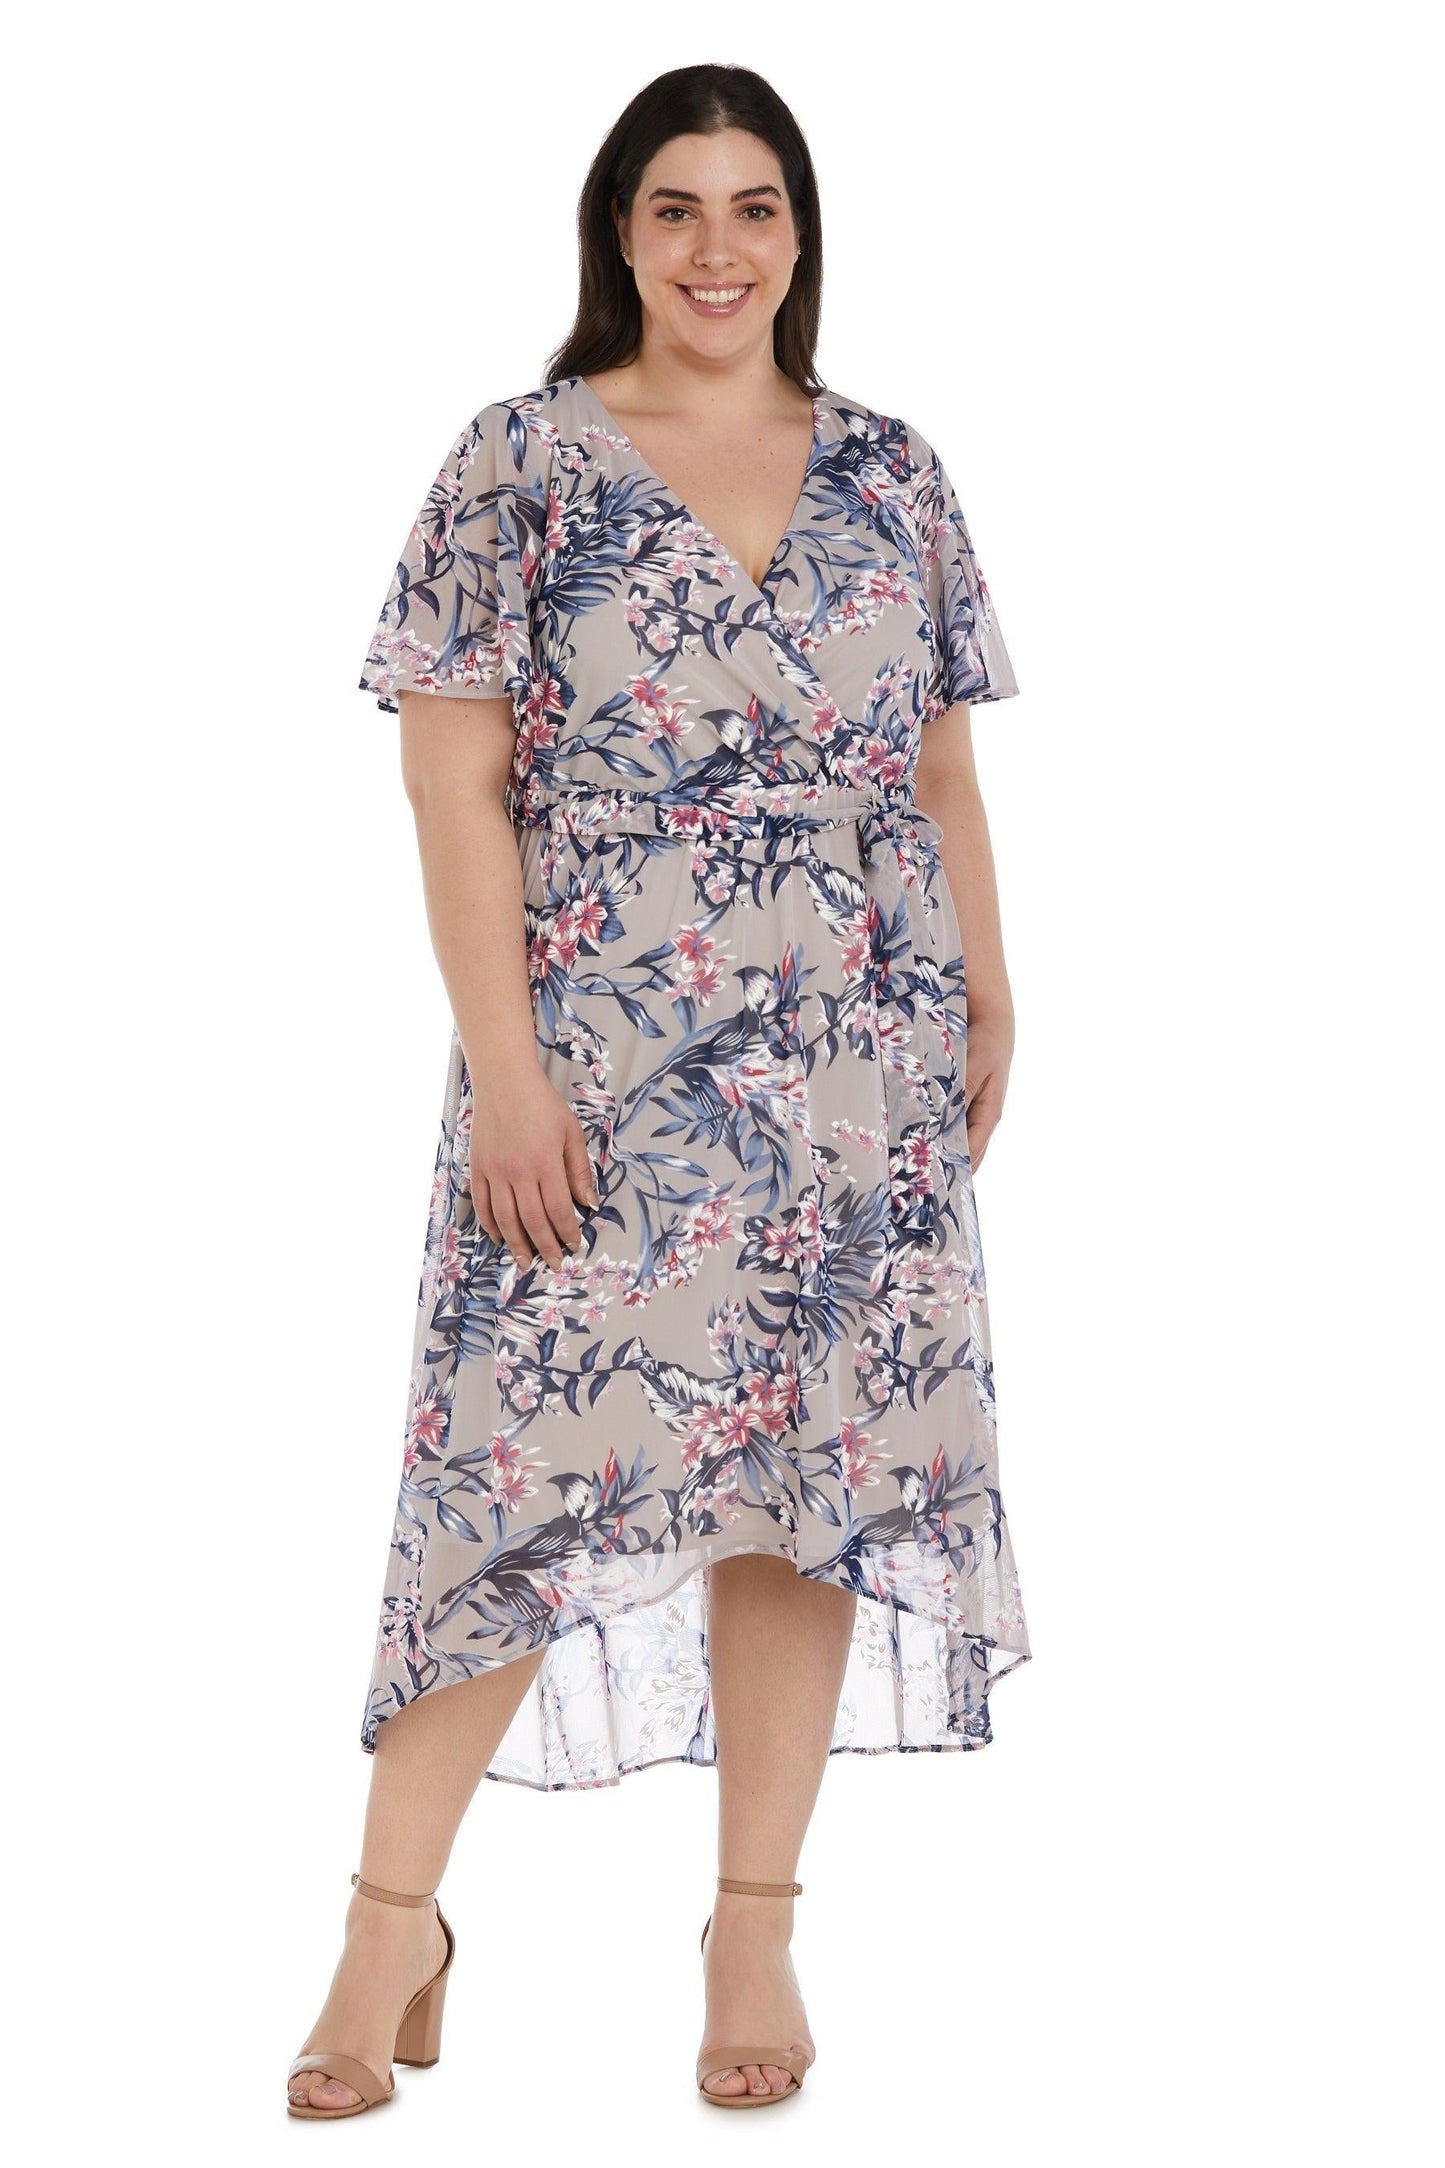 R&M Richards High Low Plus Size Floral Dress 9400W - The Dress Outlet